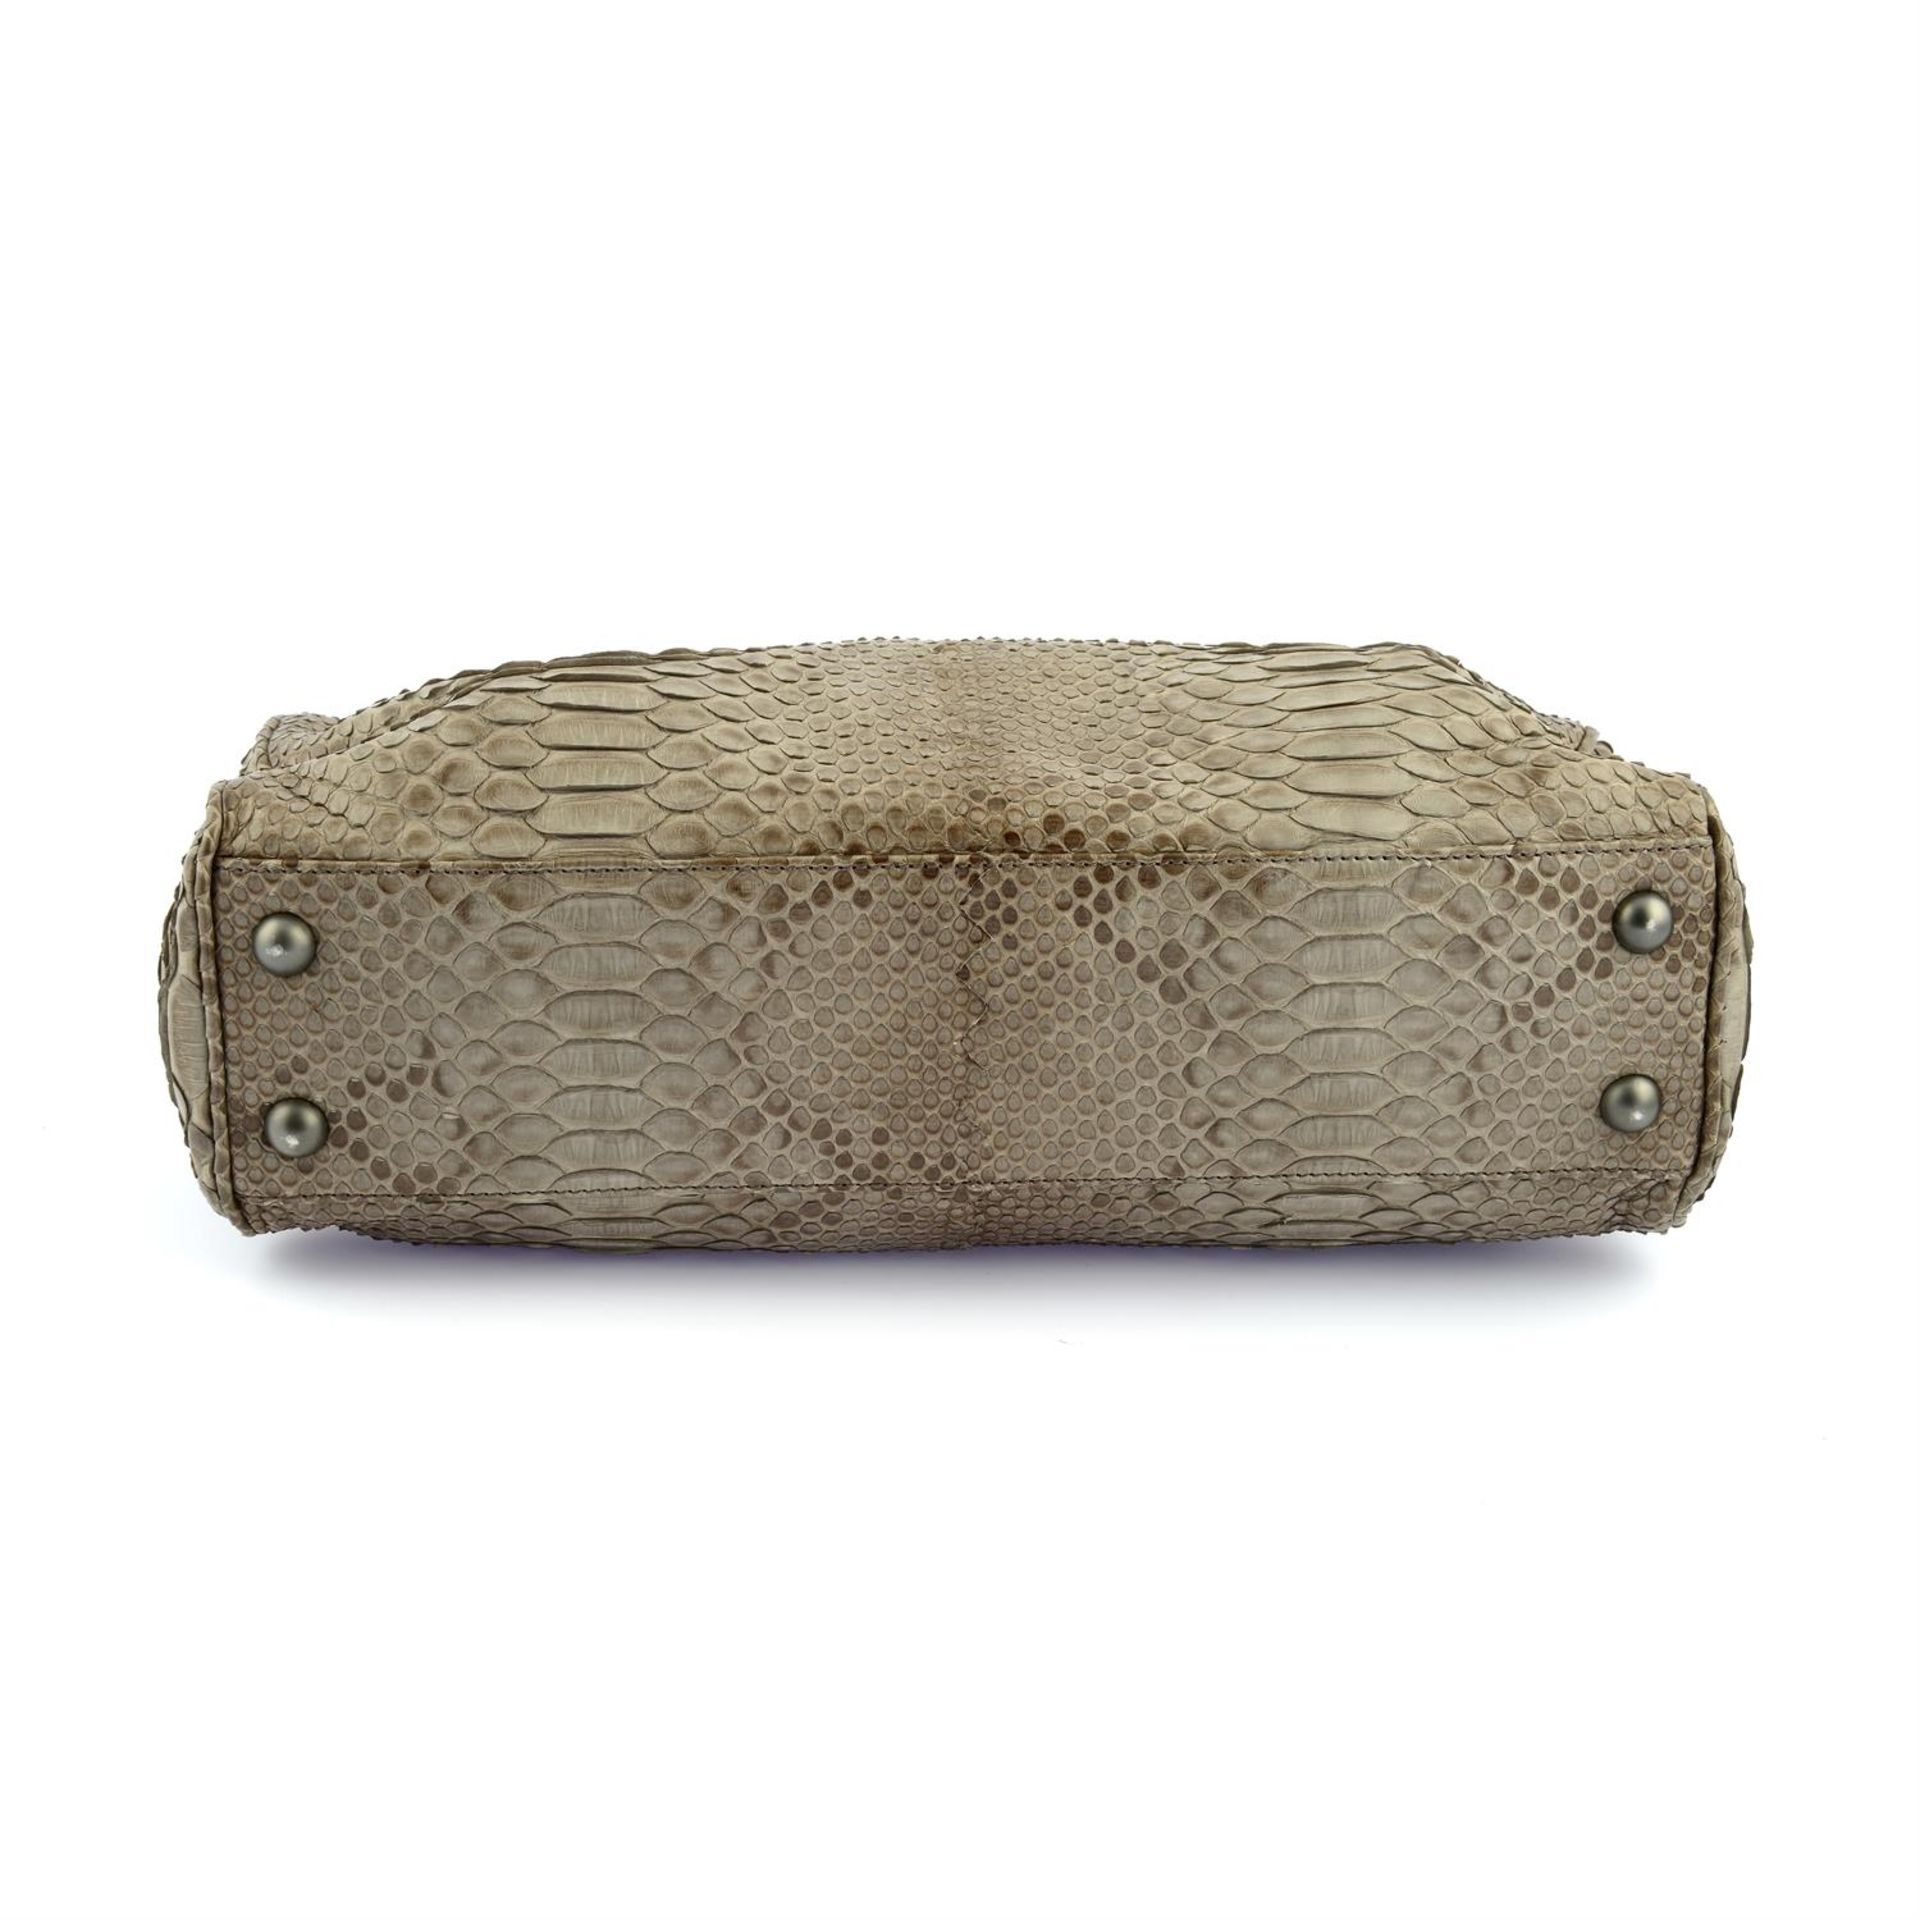 BOTTEGA VENETA - a brown Python leather clutch bag. - Bild 4 aus 4